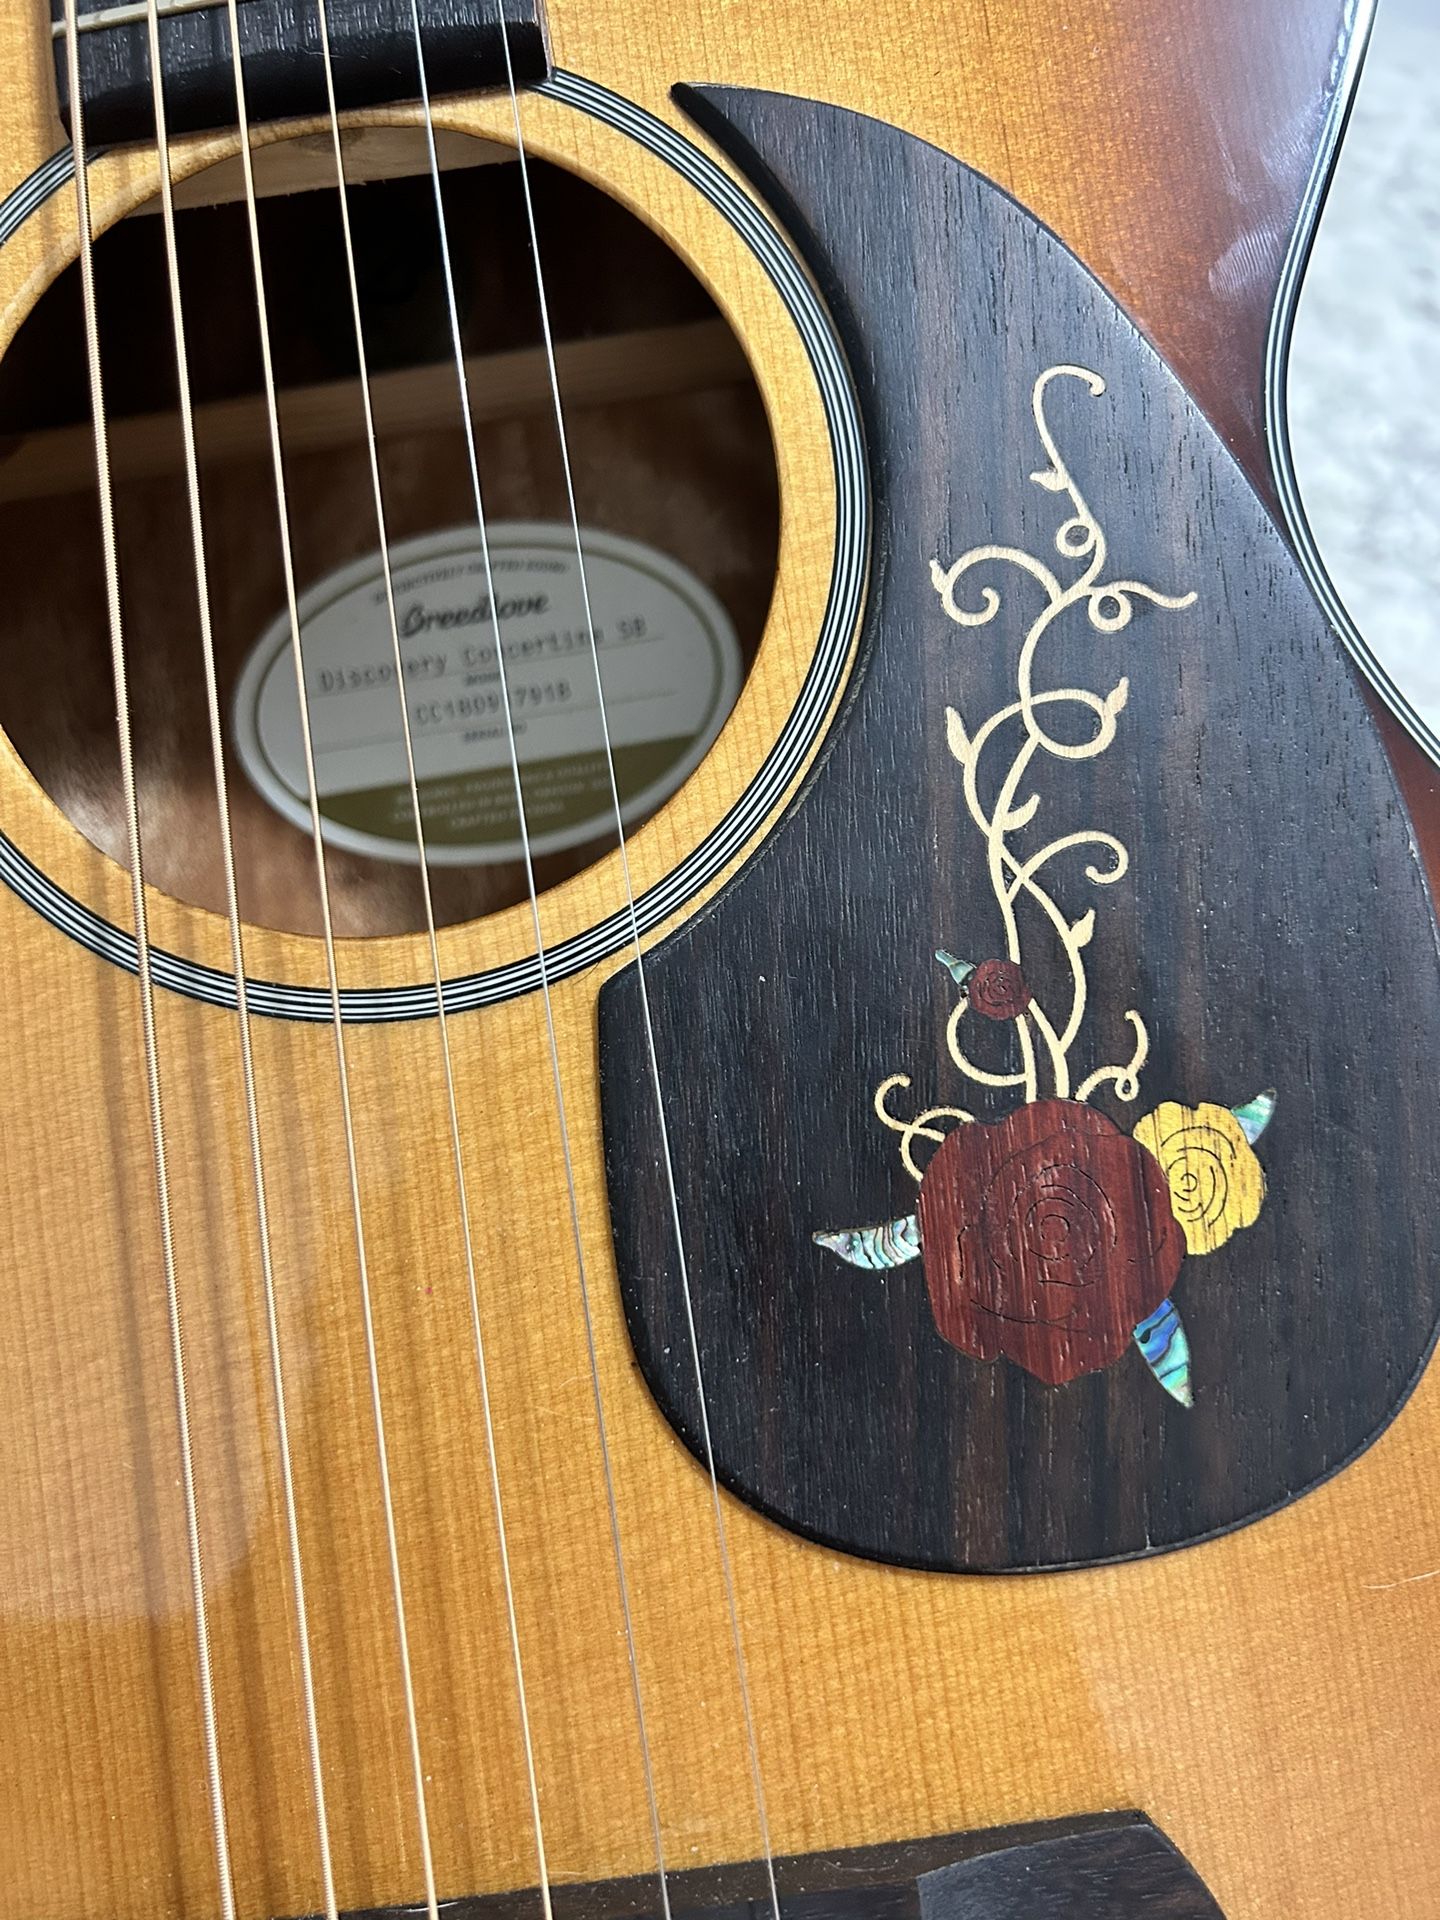 Breedlove Acoustic Guitar 